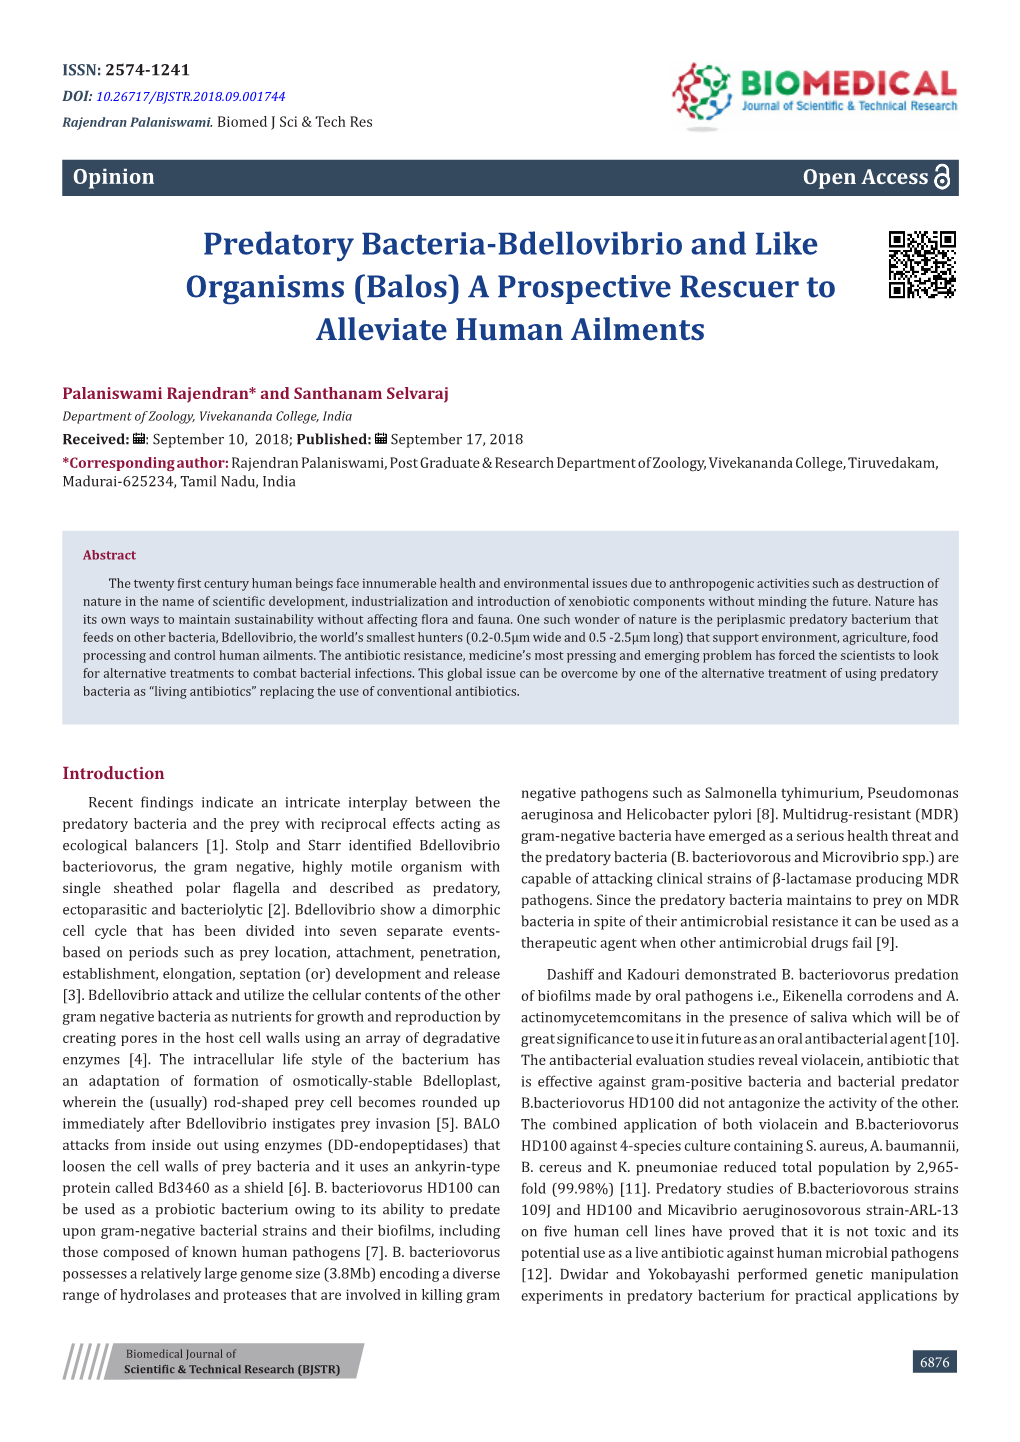 Predatory Bacteria-Bdellovibrio and Like Organisms (Balos) a Prospective Rescuer to Alleviate Human Ailments